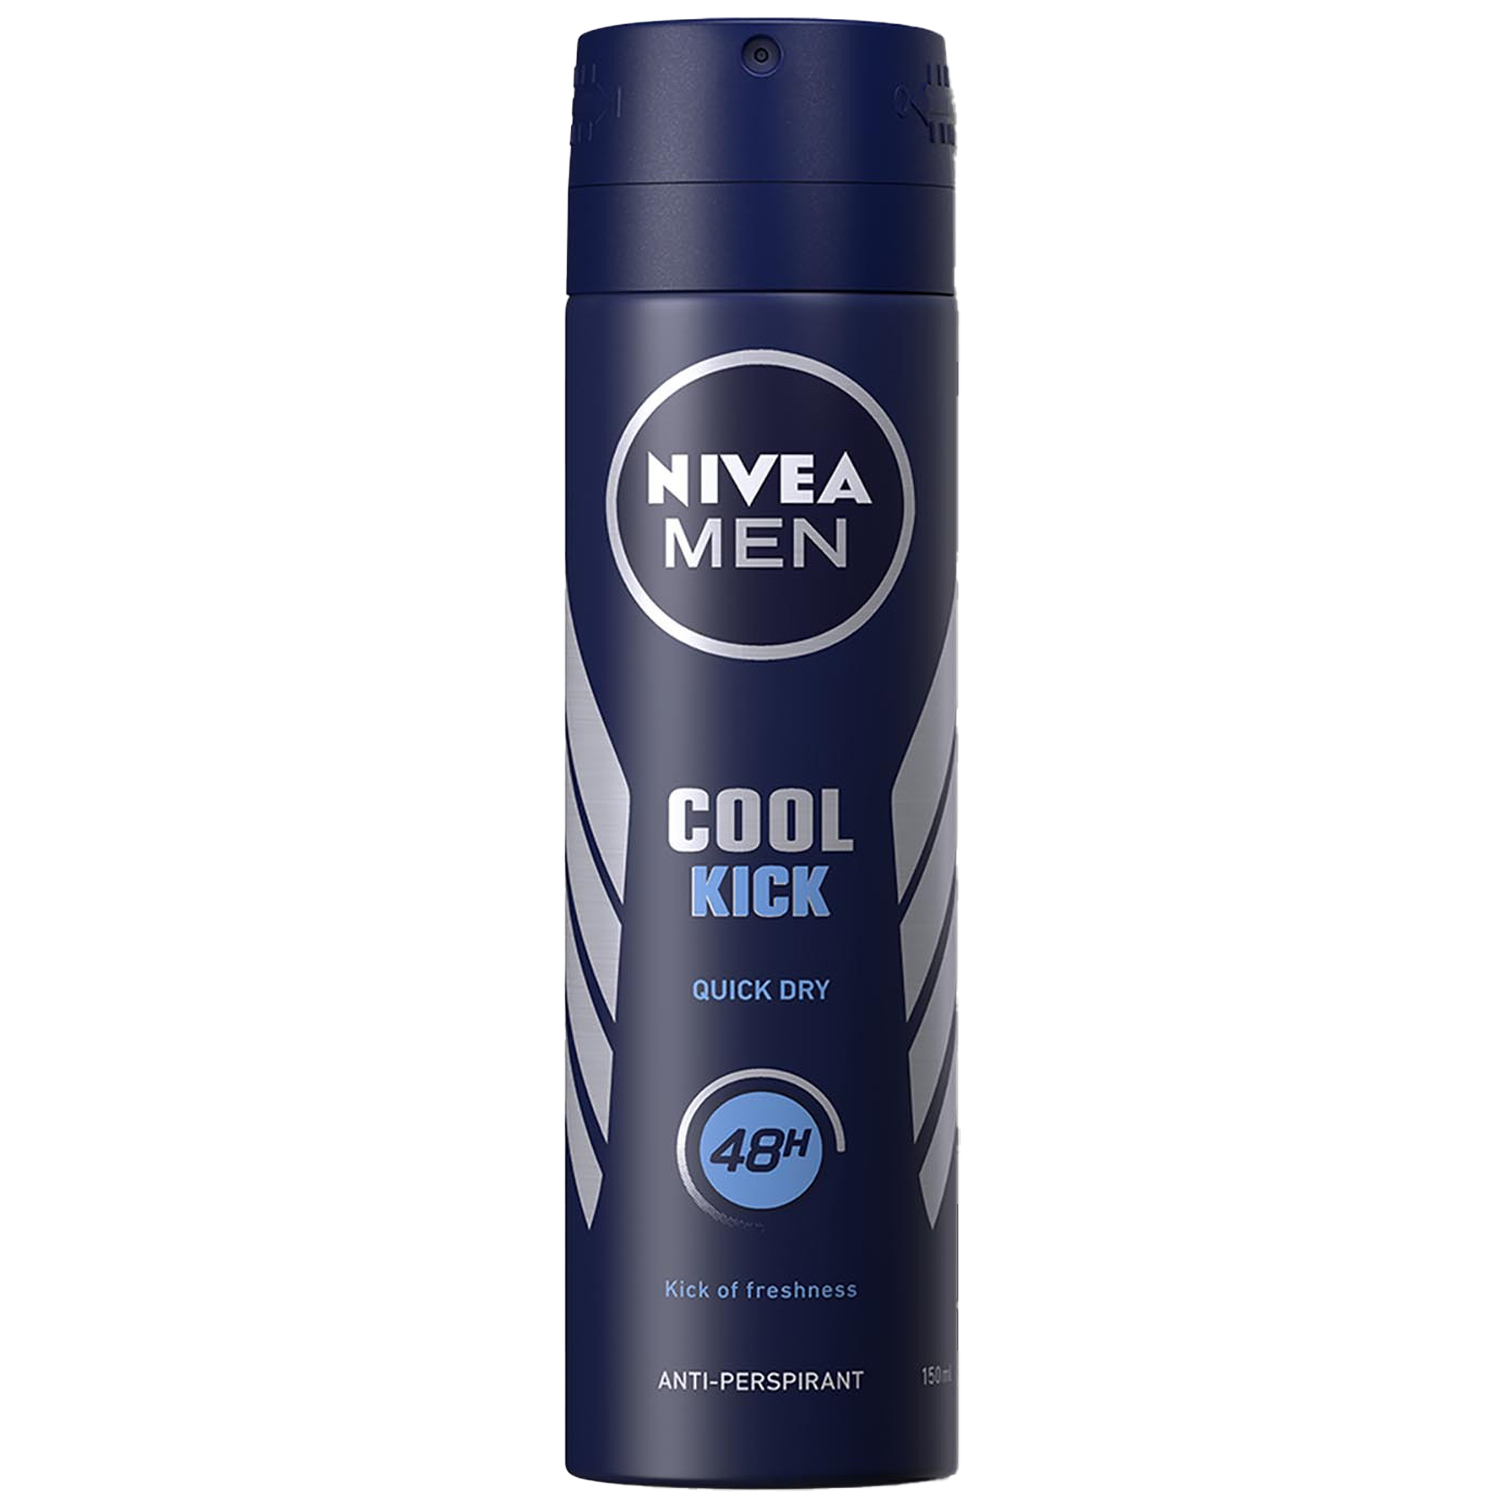 Nivea Men Cool Kick 48h Anti-Perspirant Spray - Blue Image